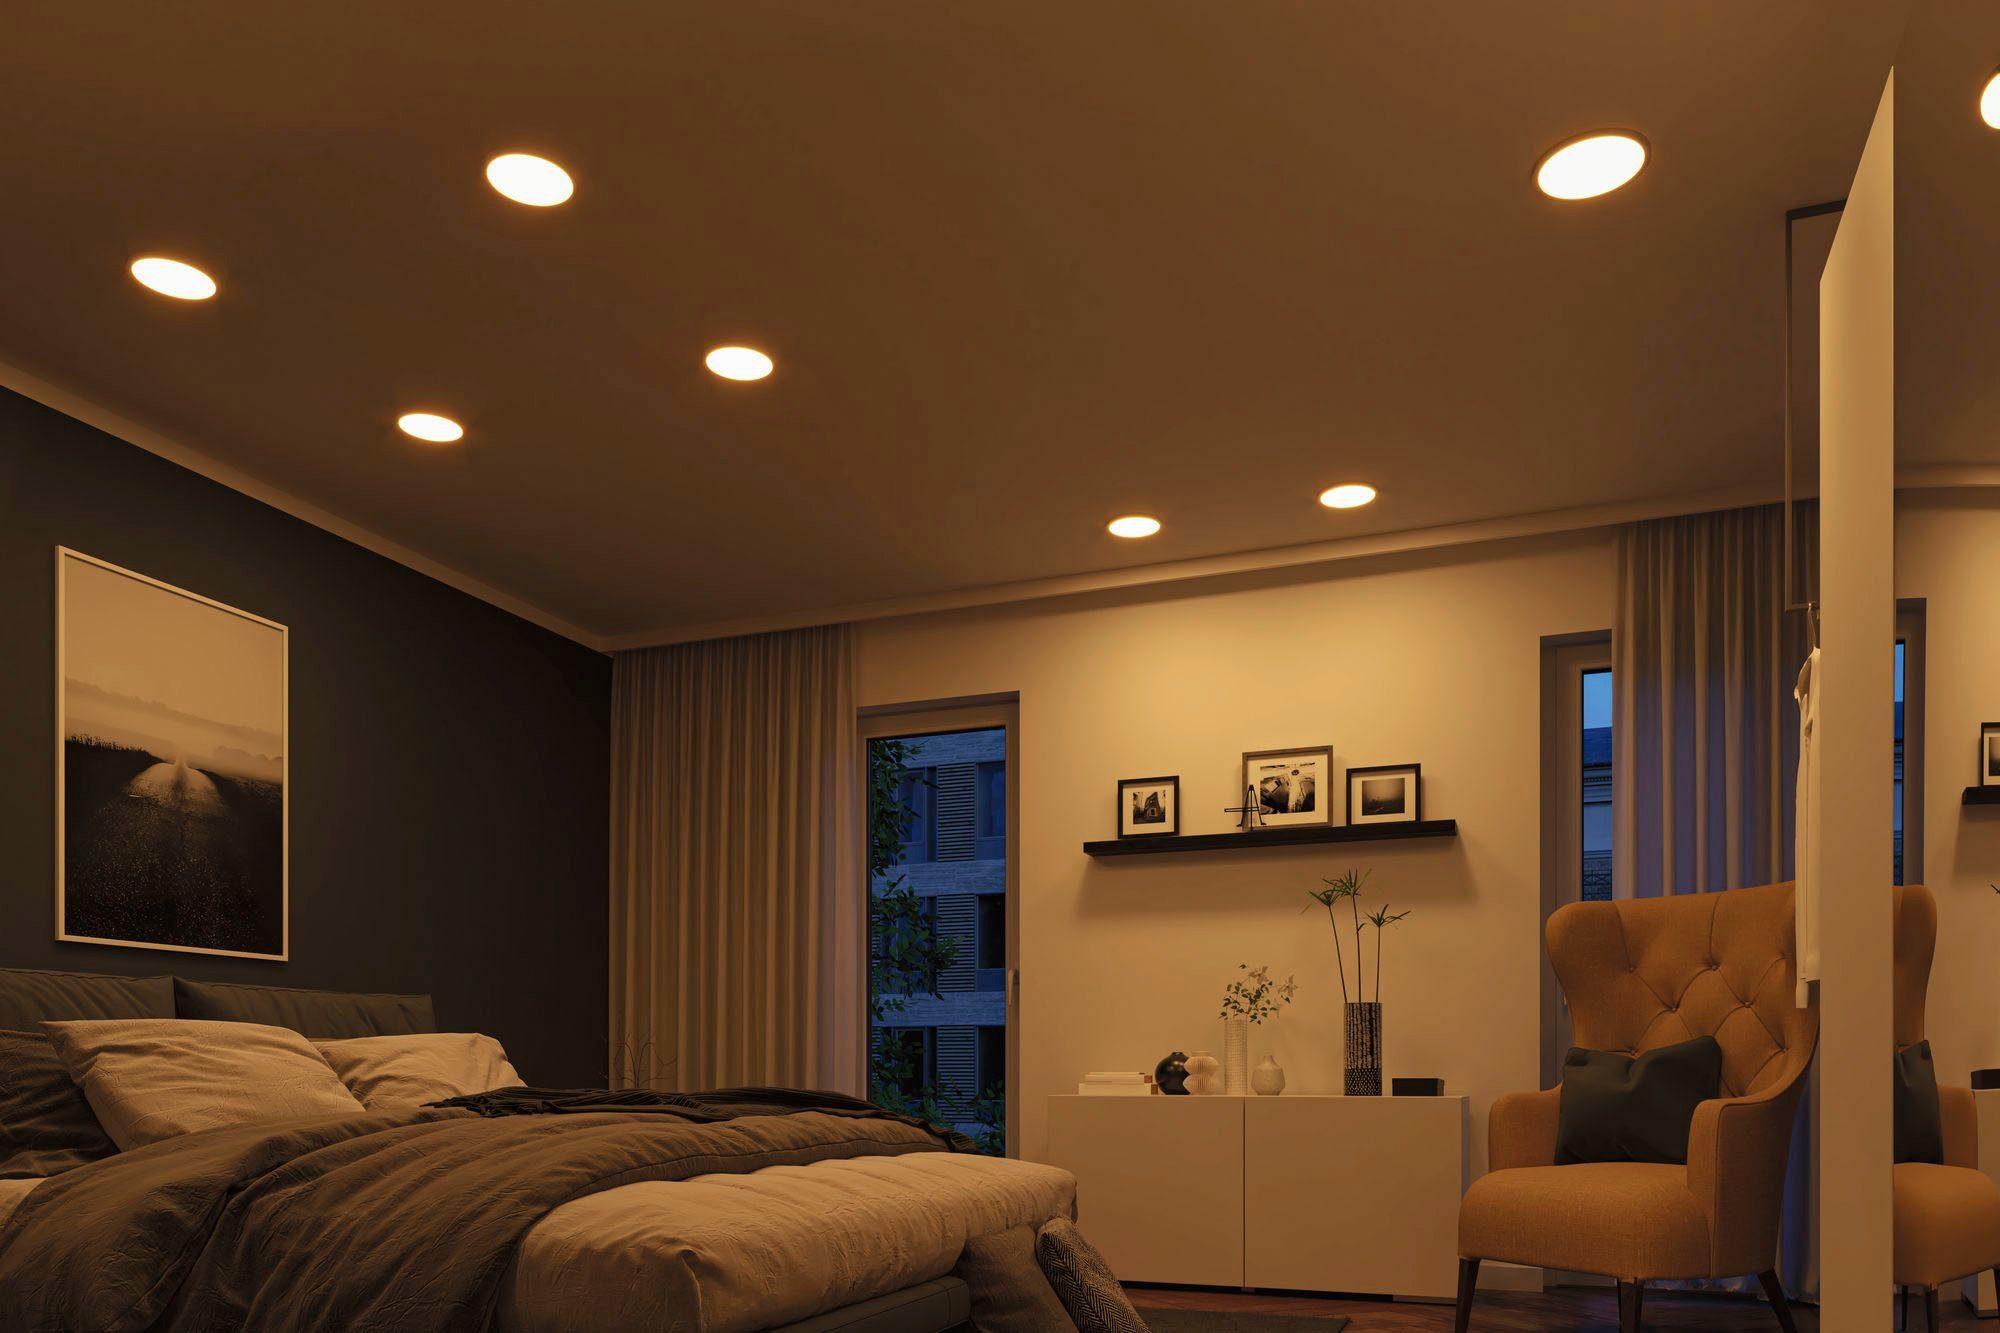 Einbauleuchte LED WarmDim-Stepschaltung fest integriert, Memoryfunktion, LED Areo, Warmweiß, LED-Modul, Paulmann